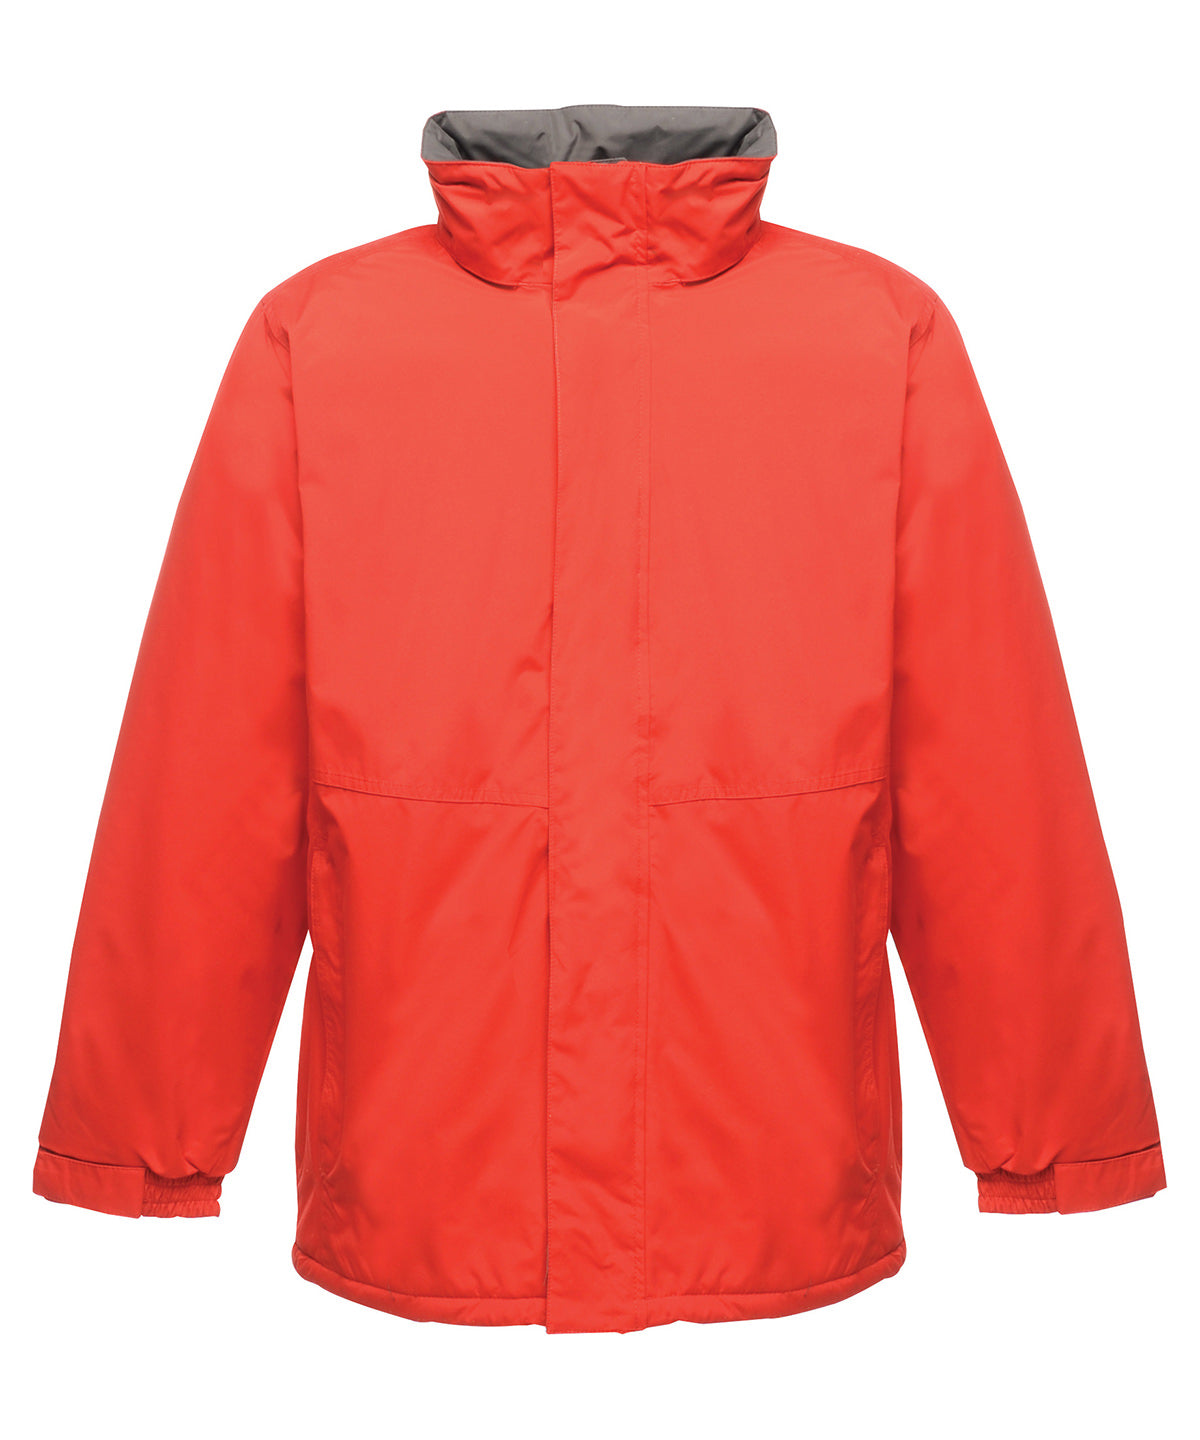 Regatta Beauford insulated jacket